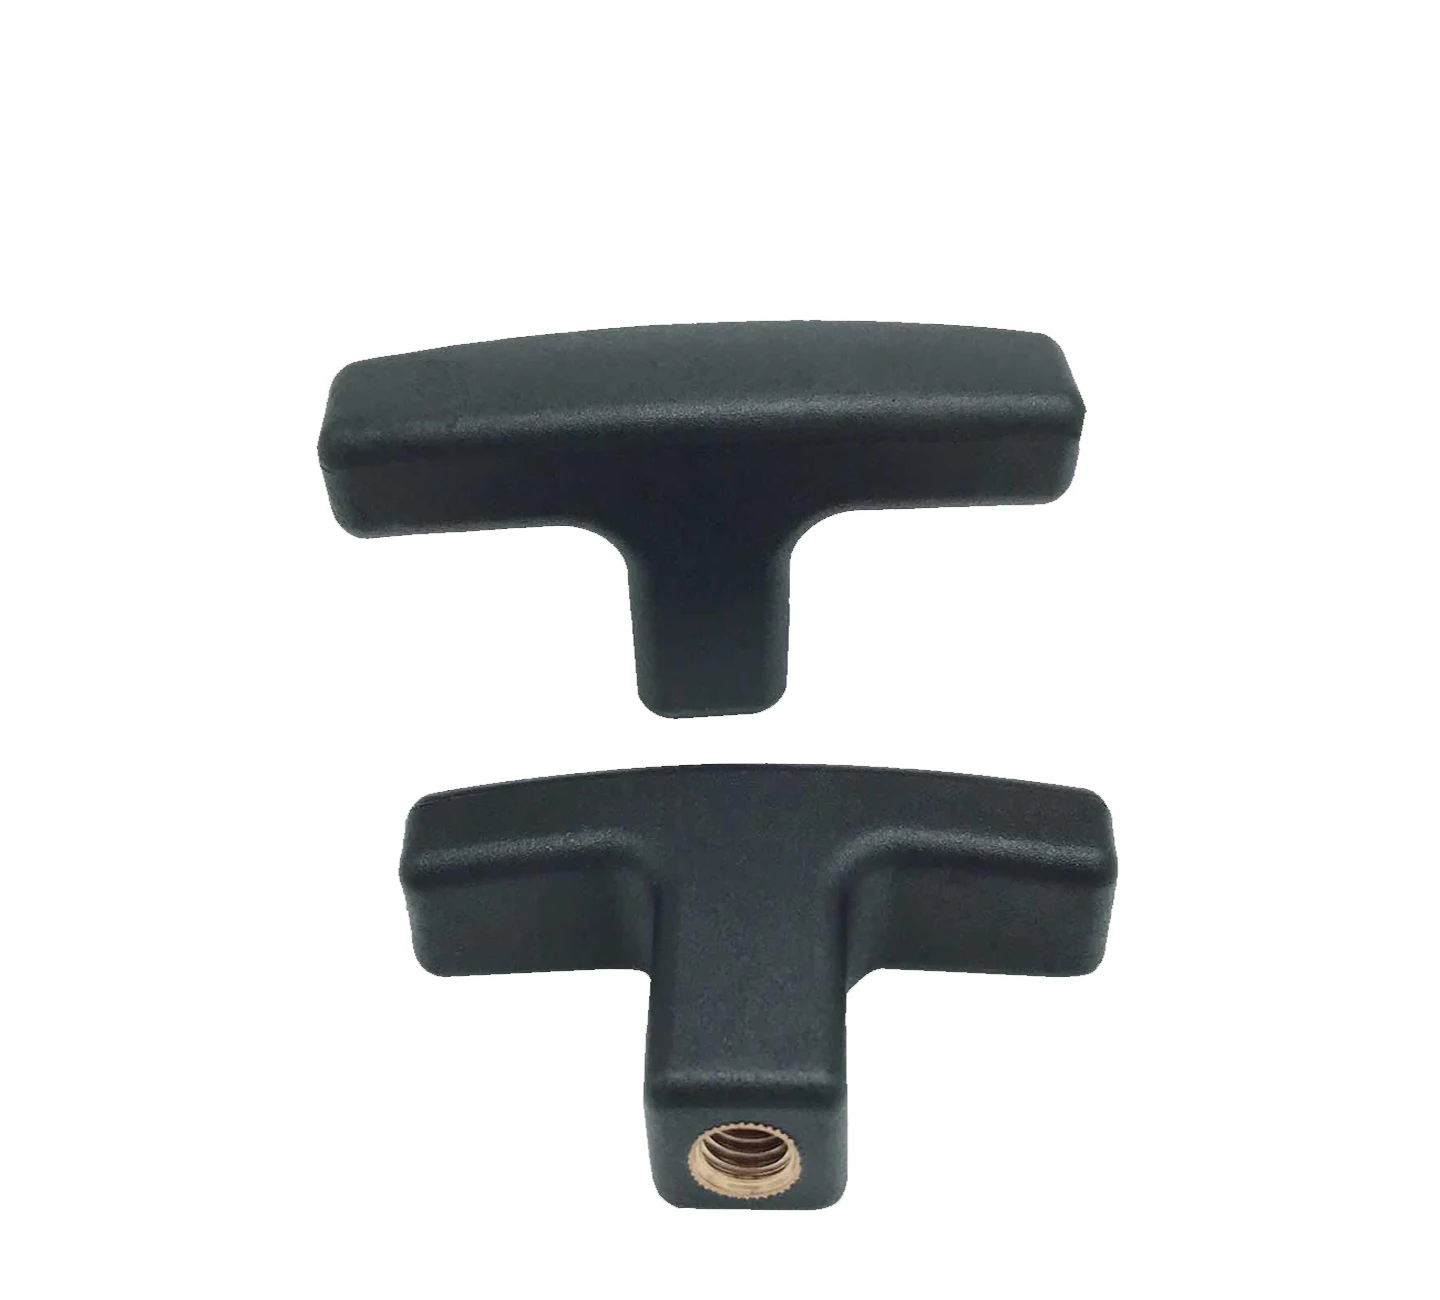 2pcs 6mm x 30mm Male Thread Plastic T Handle Screw On Type Clamping Knob 712662206286 